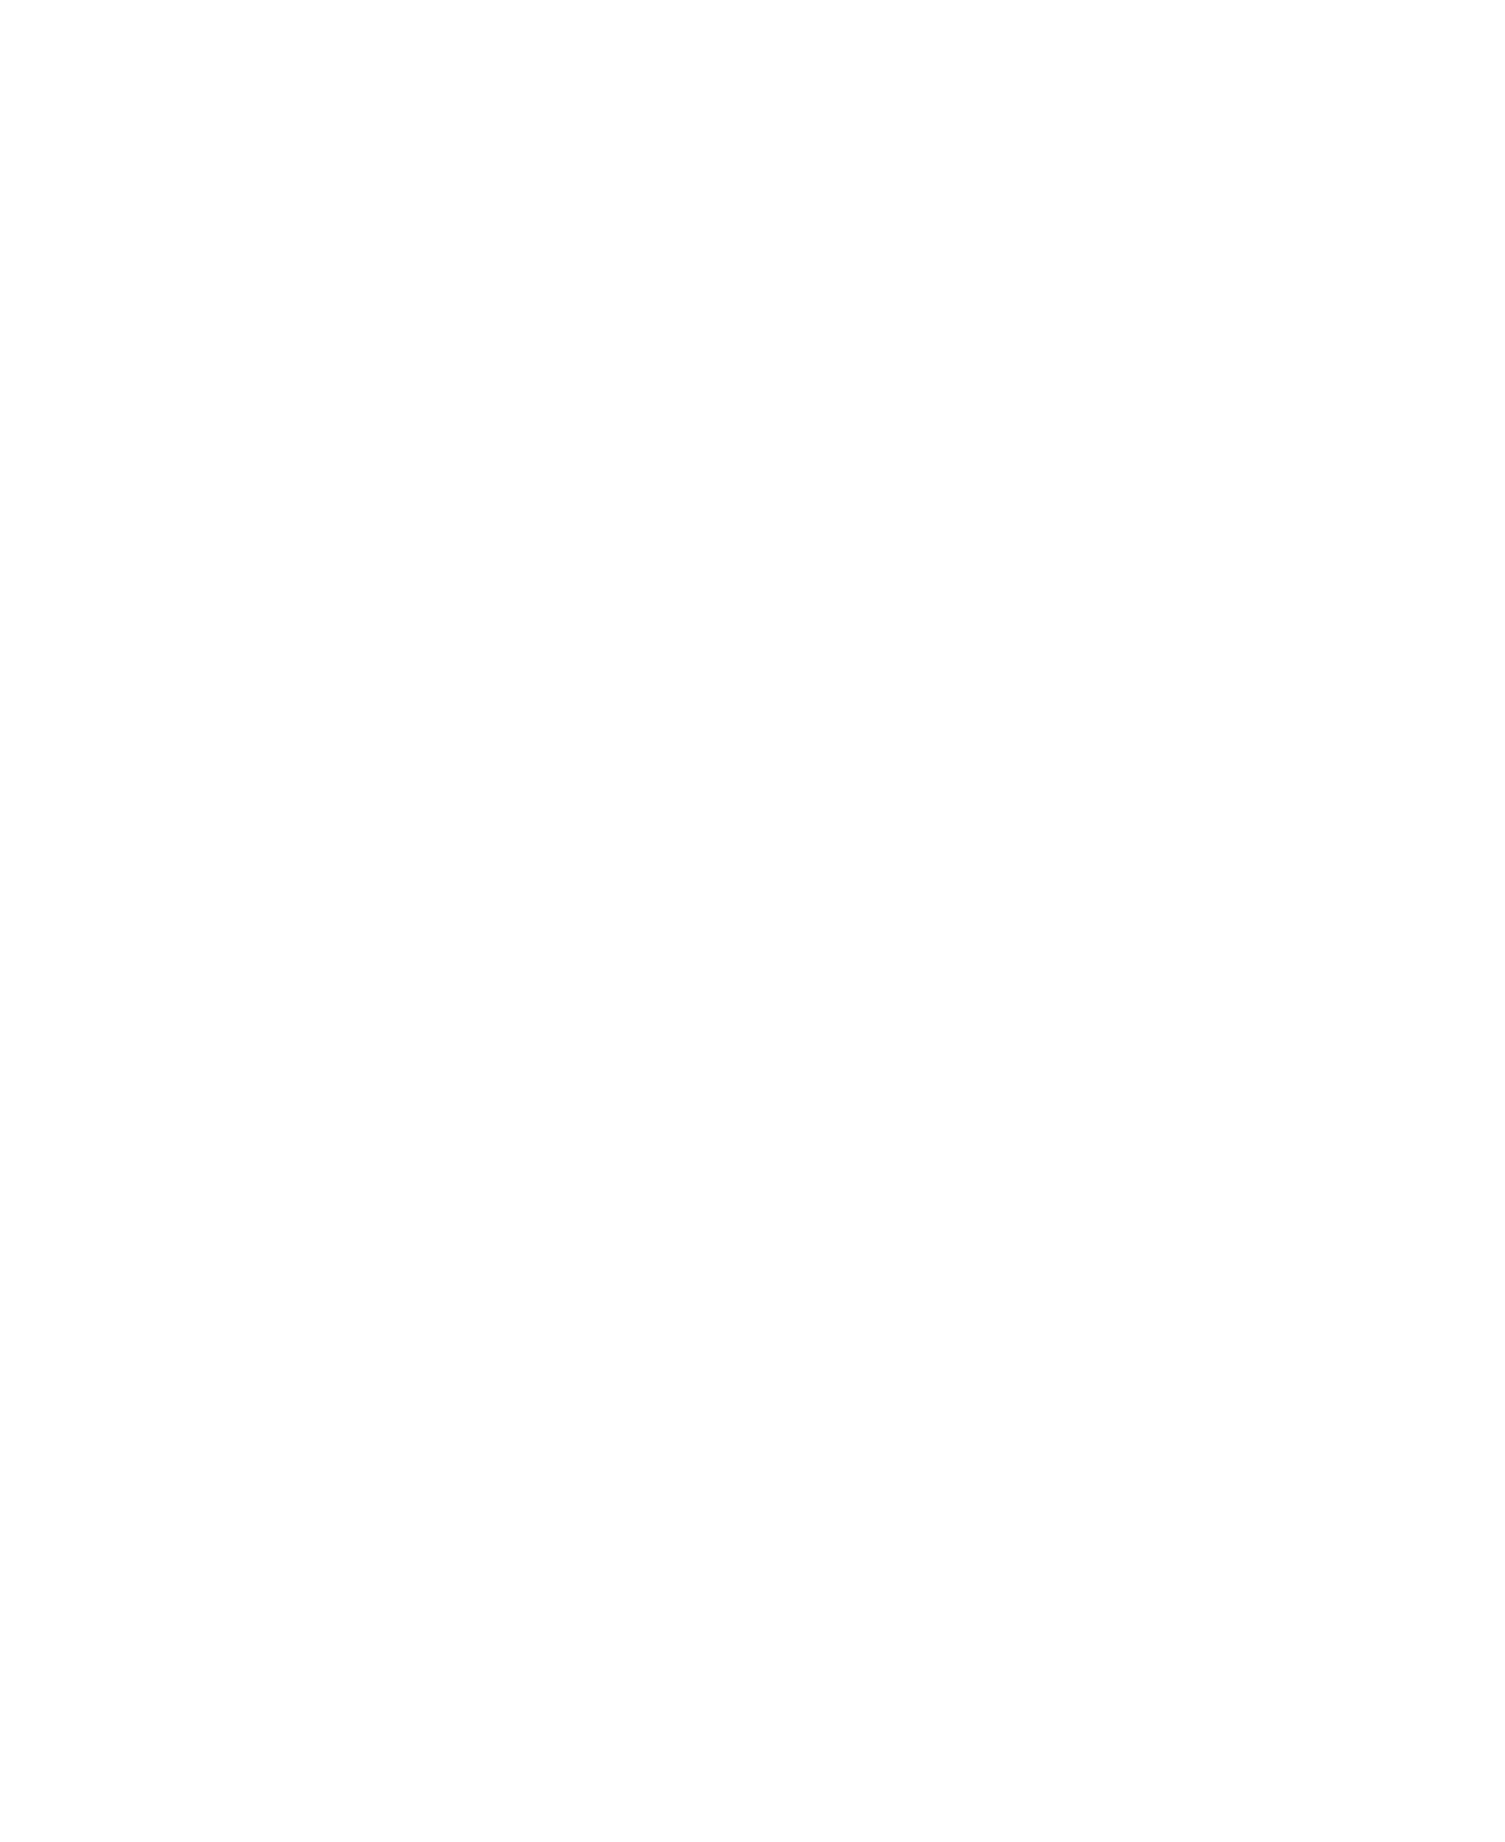 Parex Resources logo for dark backgrounds (transparent PNG)